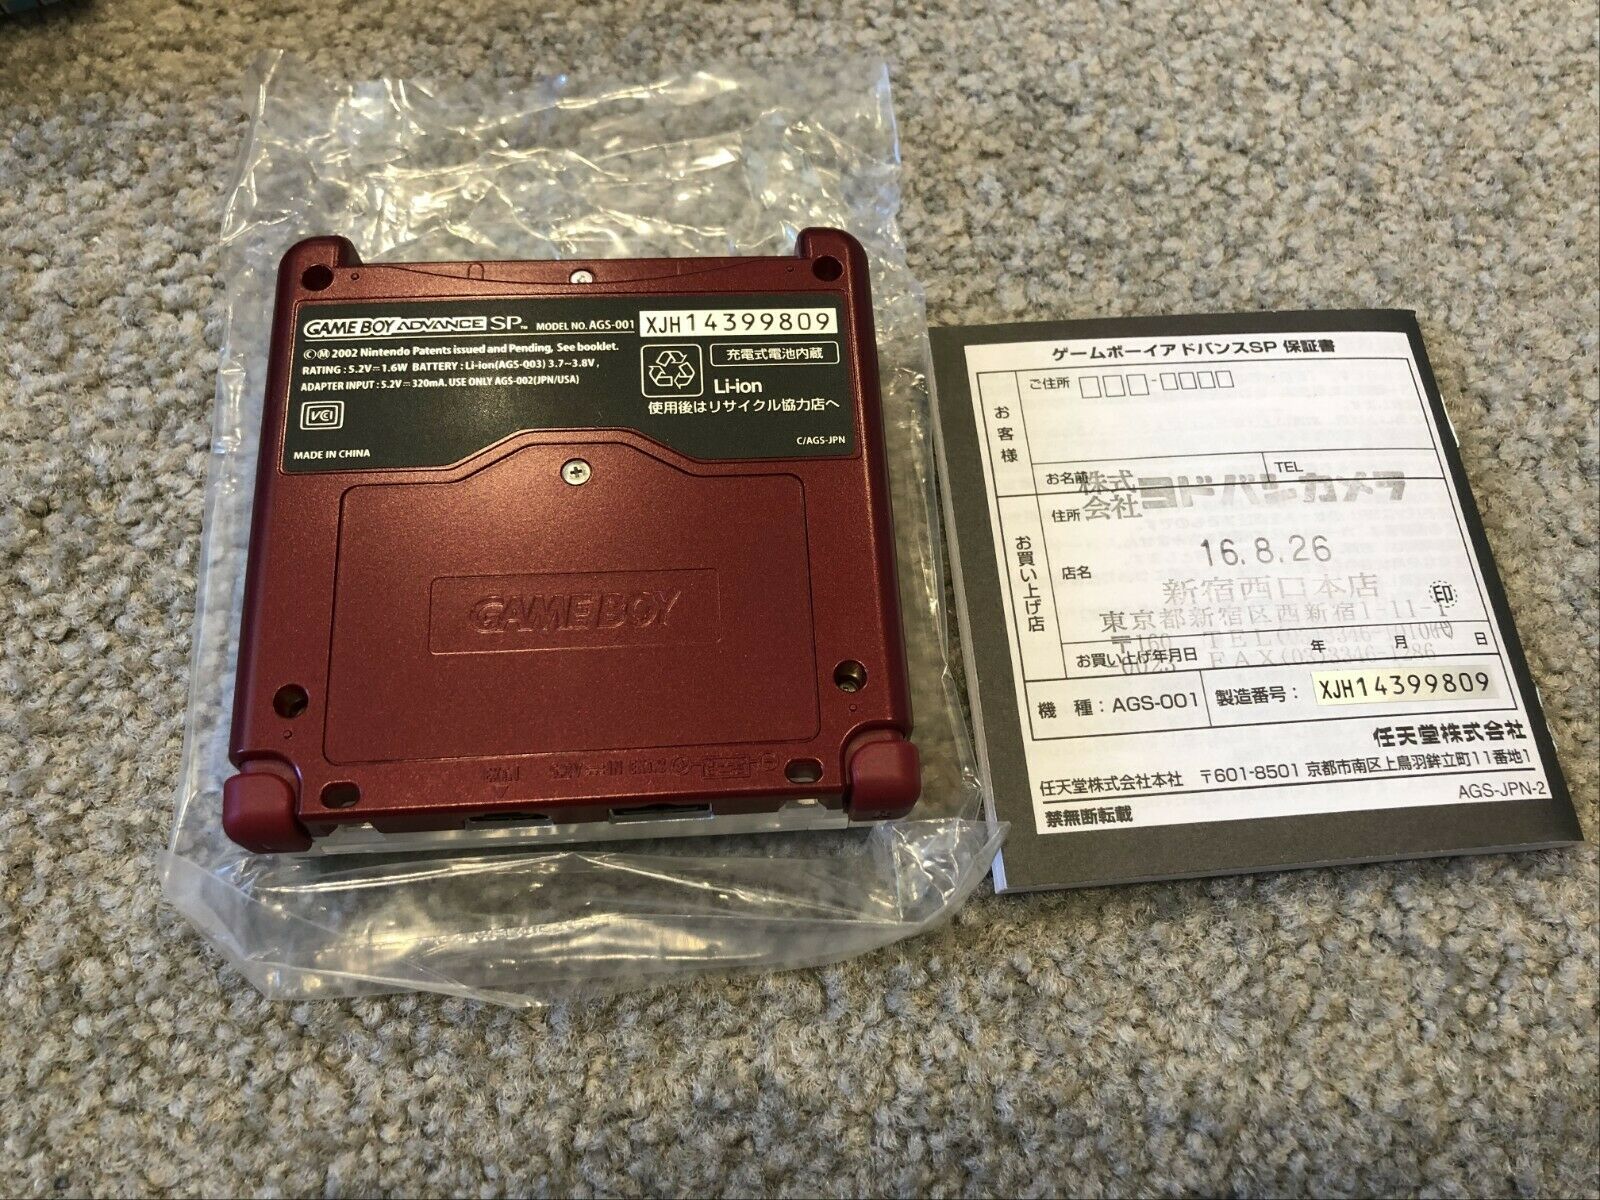 Game Boy Advance SP Famicom